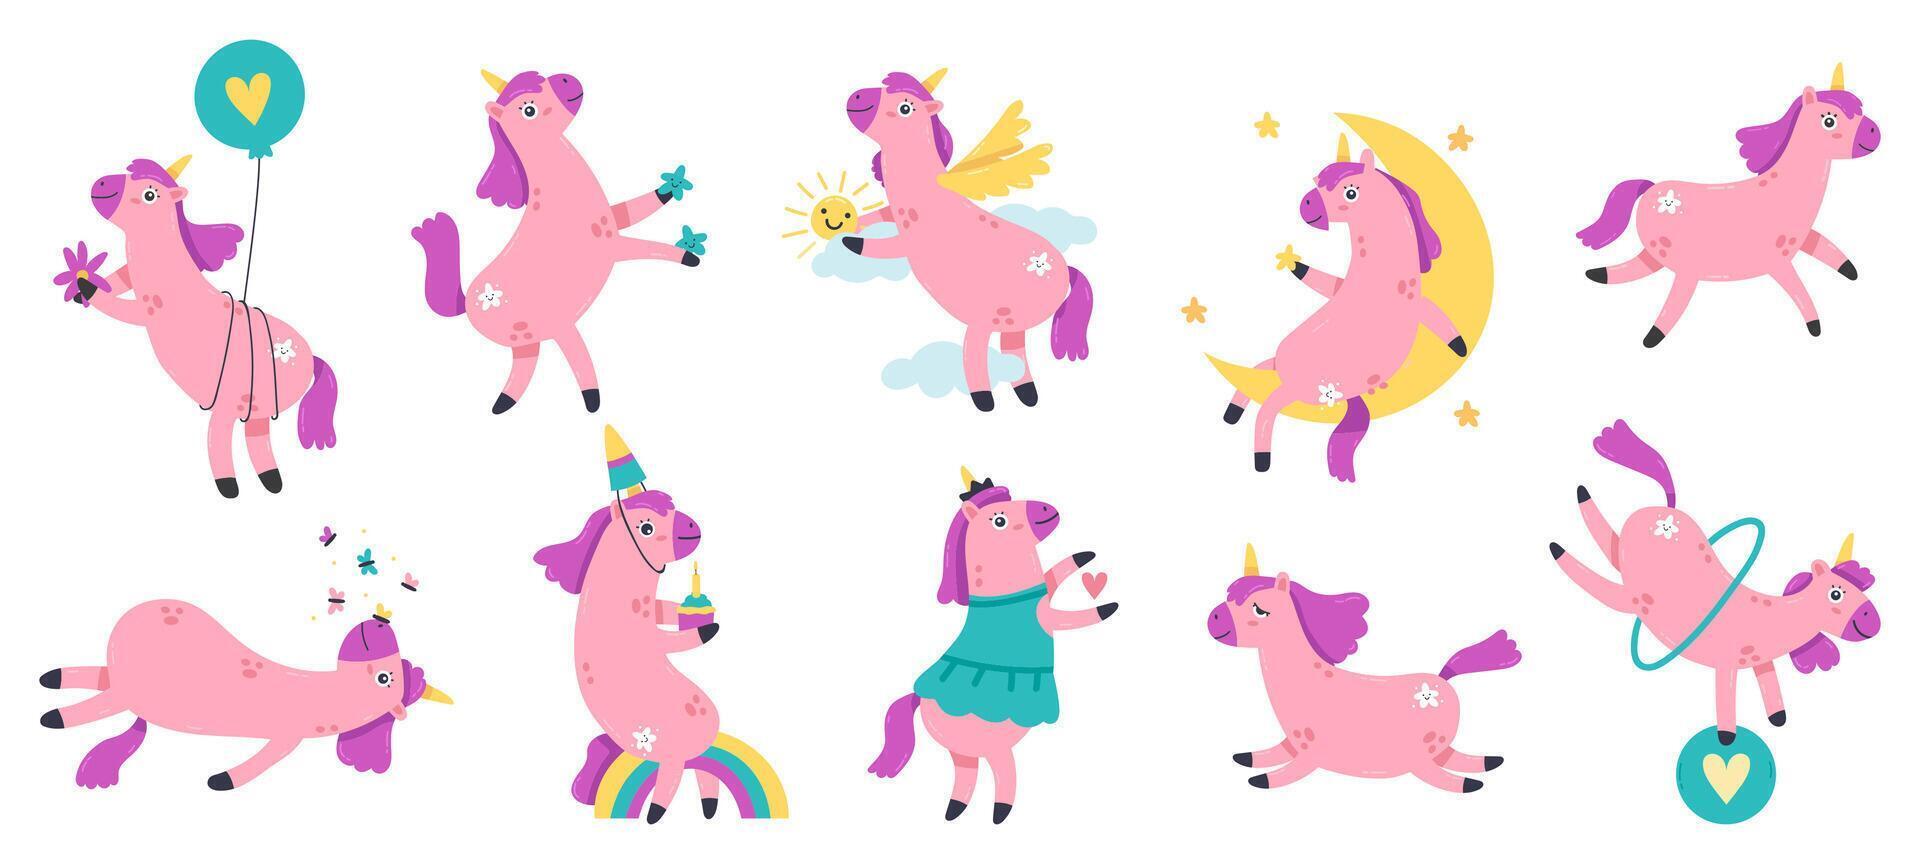 Cute unicorns. Funny hand drawn rainbow unicorns, magic fairytale unicorn mascots. Pink little baby unicorns vector illustrations